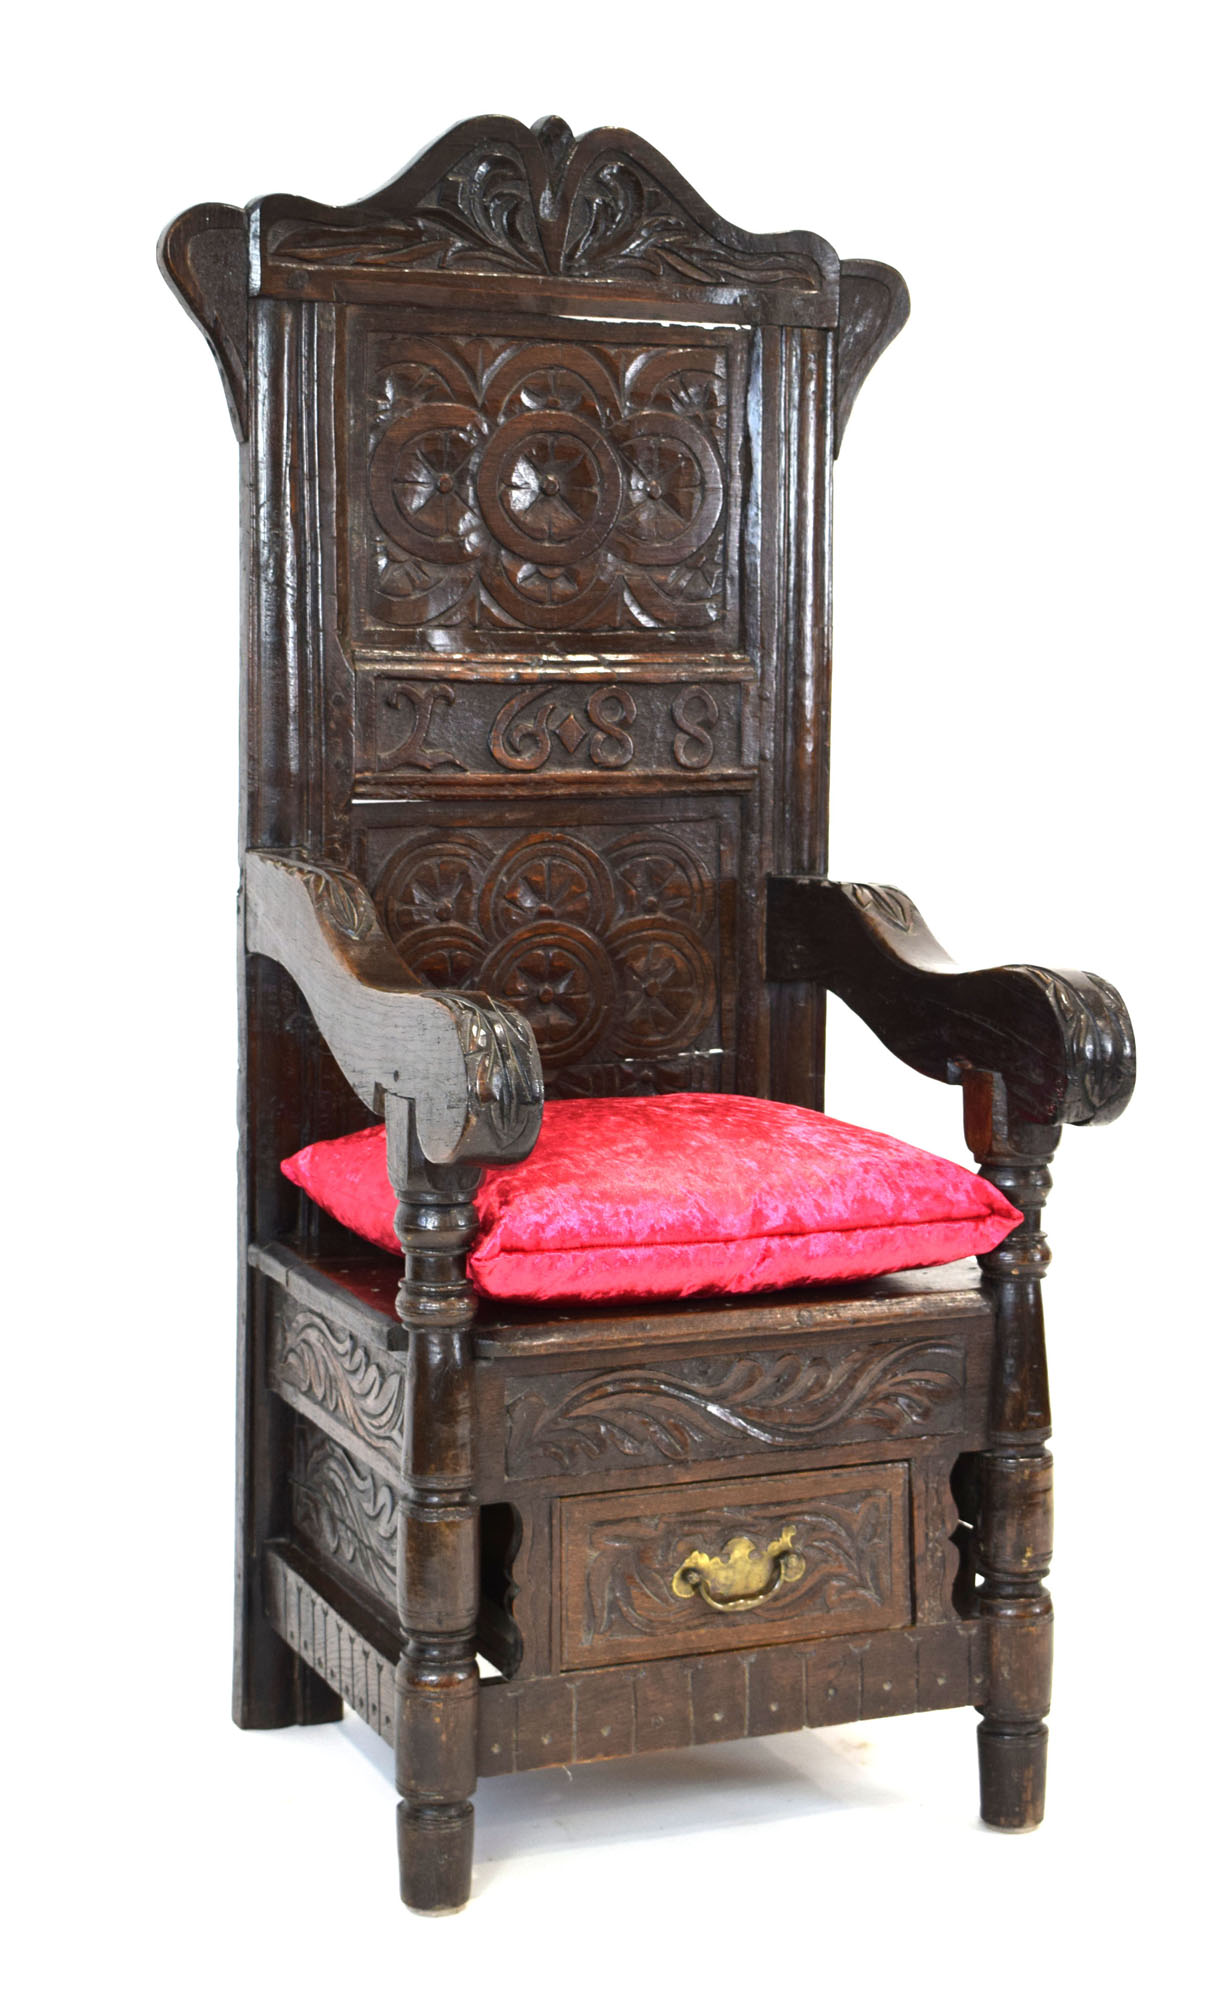 An unusual Wainscott chair, - Image 2 of 10